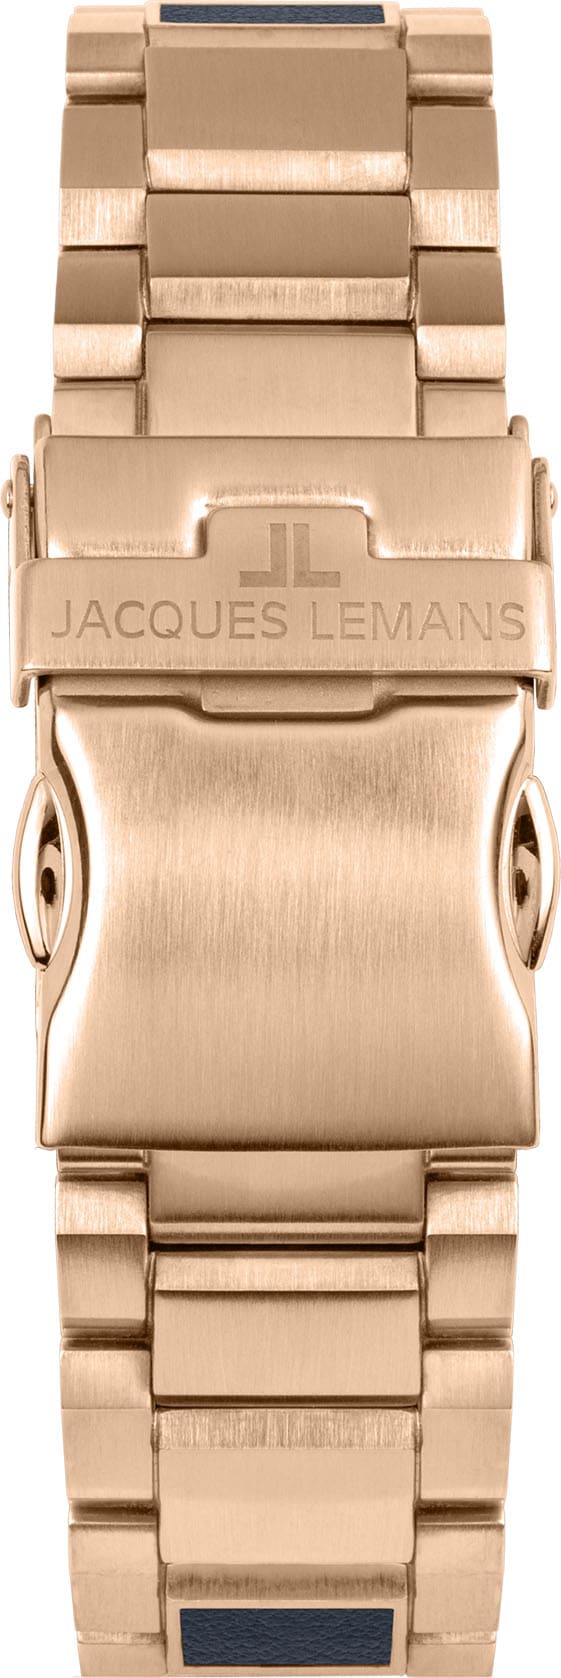 Jacques Lemans Solaruhr »Eco Power, 1-2116F«, Armbanduhr, Herrenuhr, Datum, Leuchtzeigergehärtetes Crystexglas